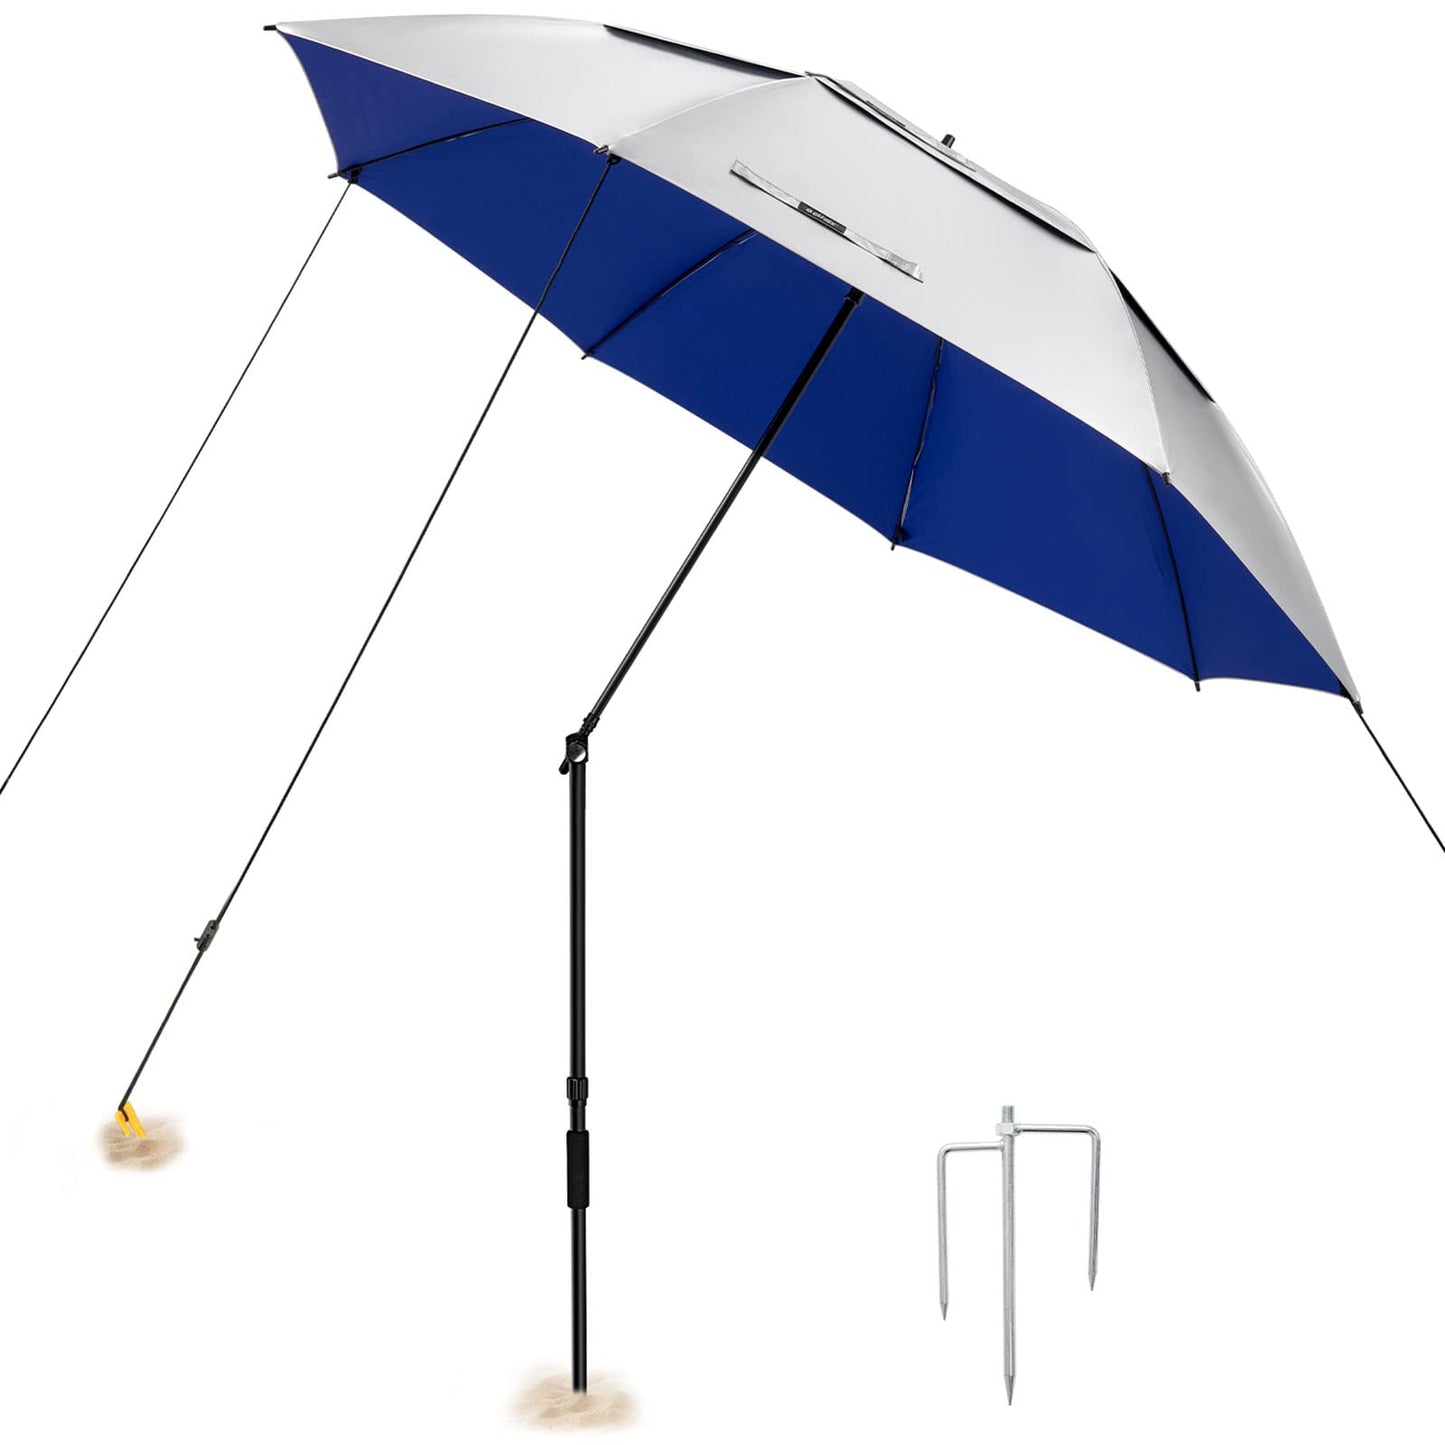 G4Free XL UV Golf/Beach Umbrella 72" Arc with Sand Anchor